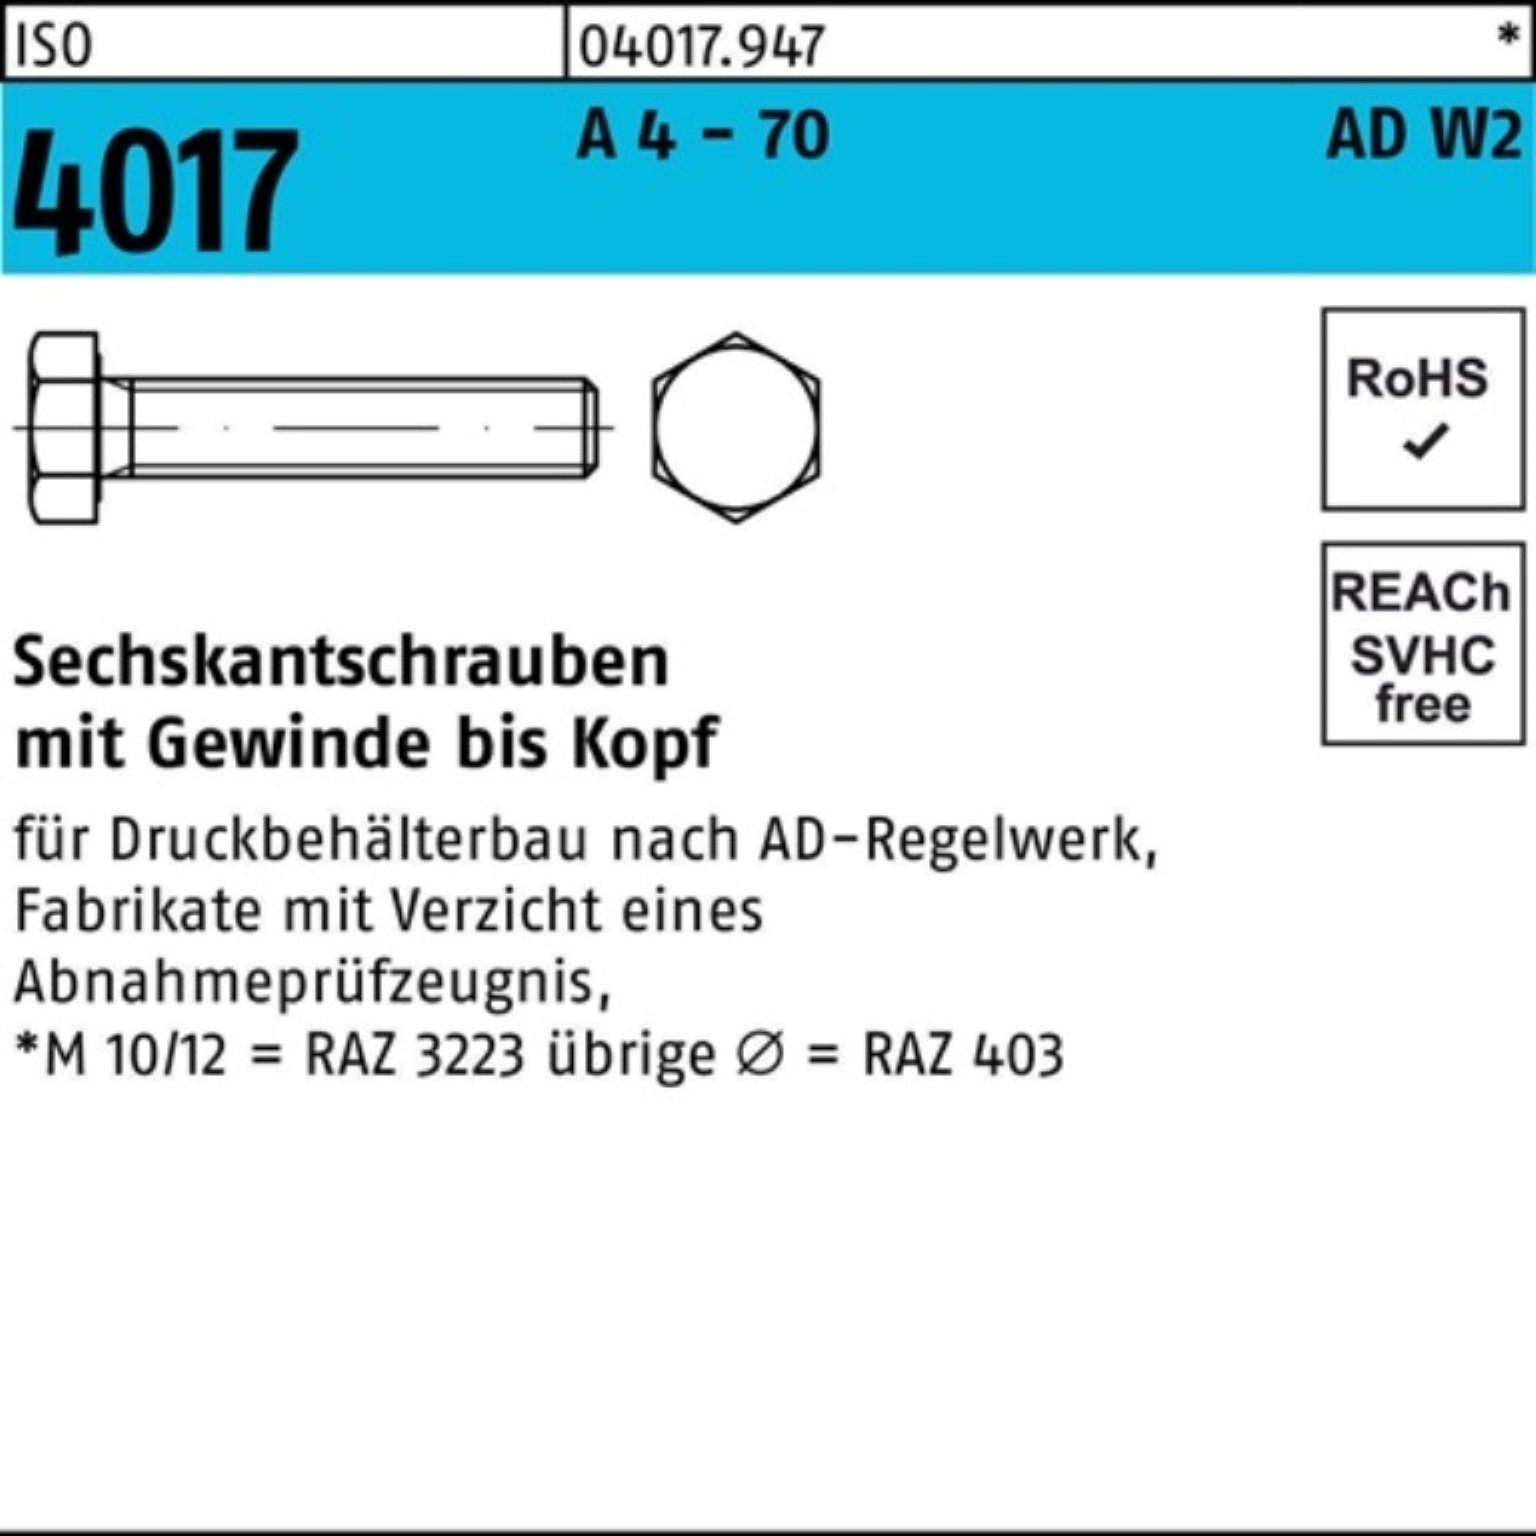 Bufab Sechskantschraube 200er Pack Sechskantschraube ISO 4017 VG M8x 12 A 4 - 70 AD-W2 200 St